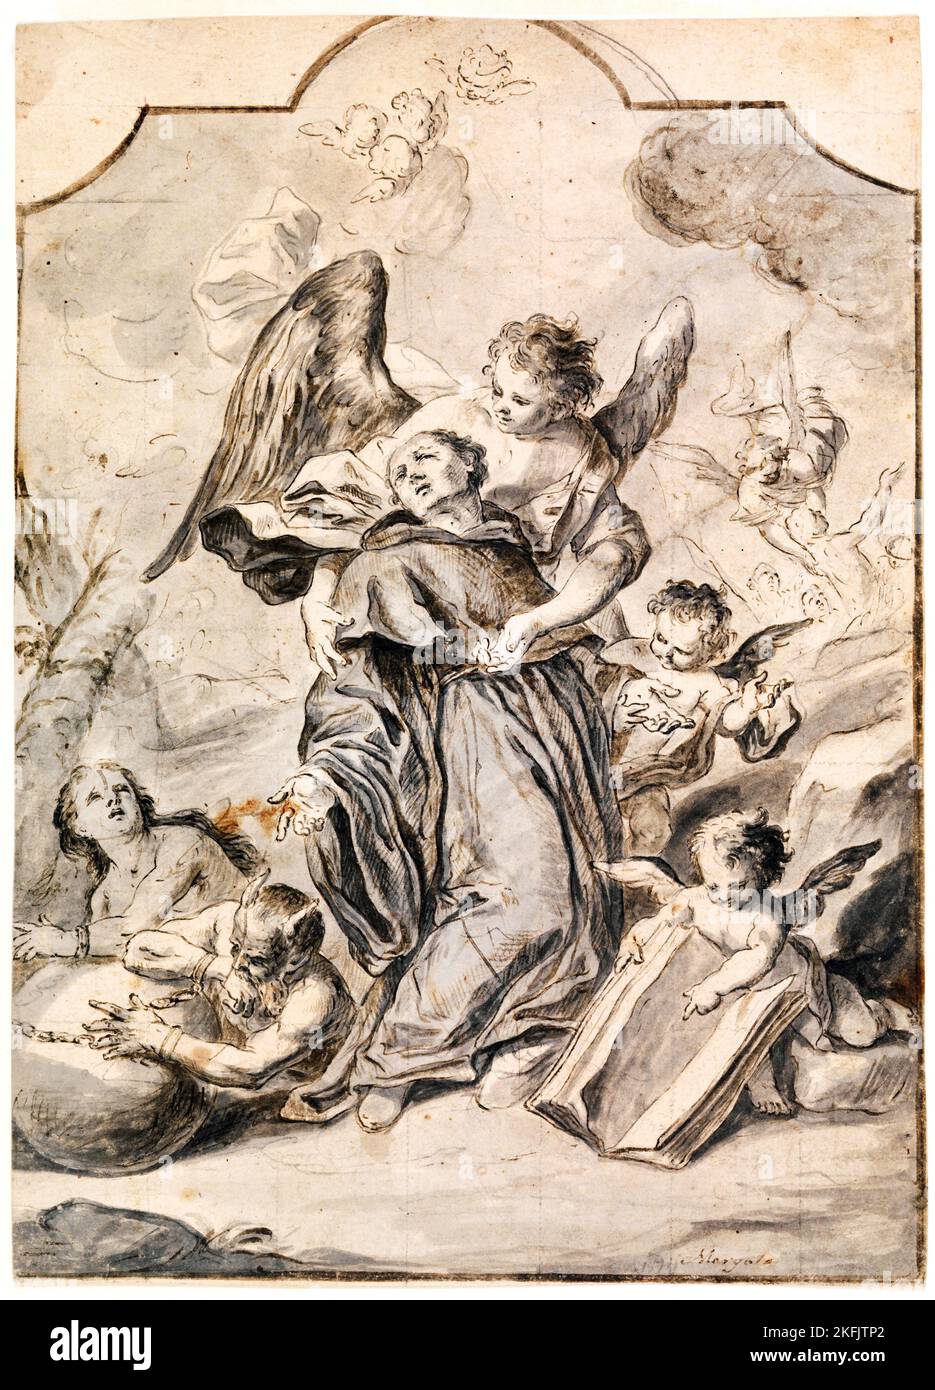 Francesco Saverio Mergolo; Vision of Sainted Benedictine Monk; 1776; Stift und braune Tinte auf Papier; Cooper Hewitt, Smithsonian Design Museum, New York Ci Stockfoto